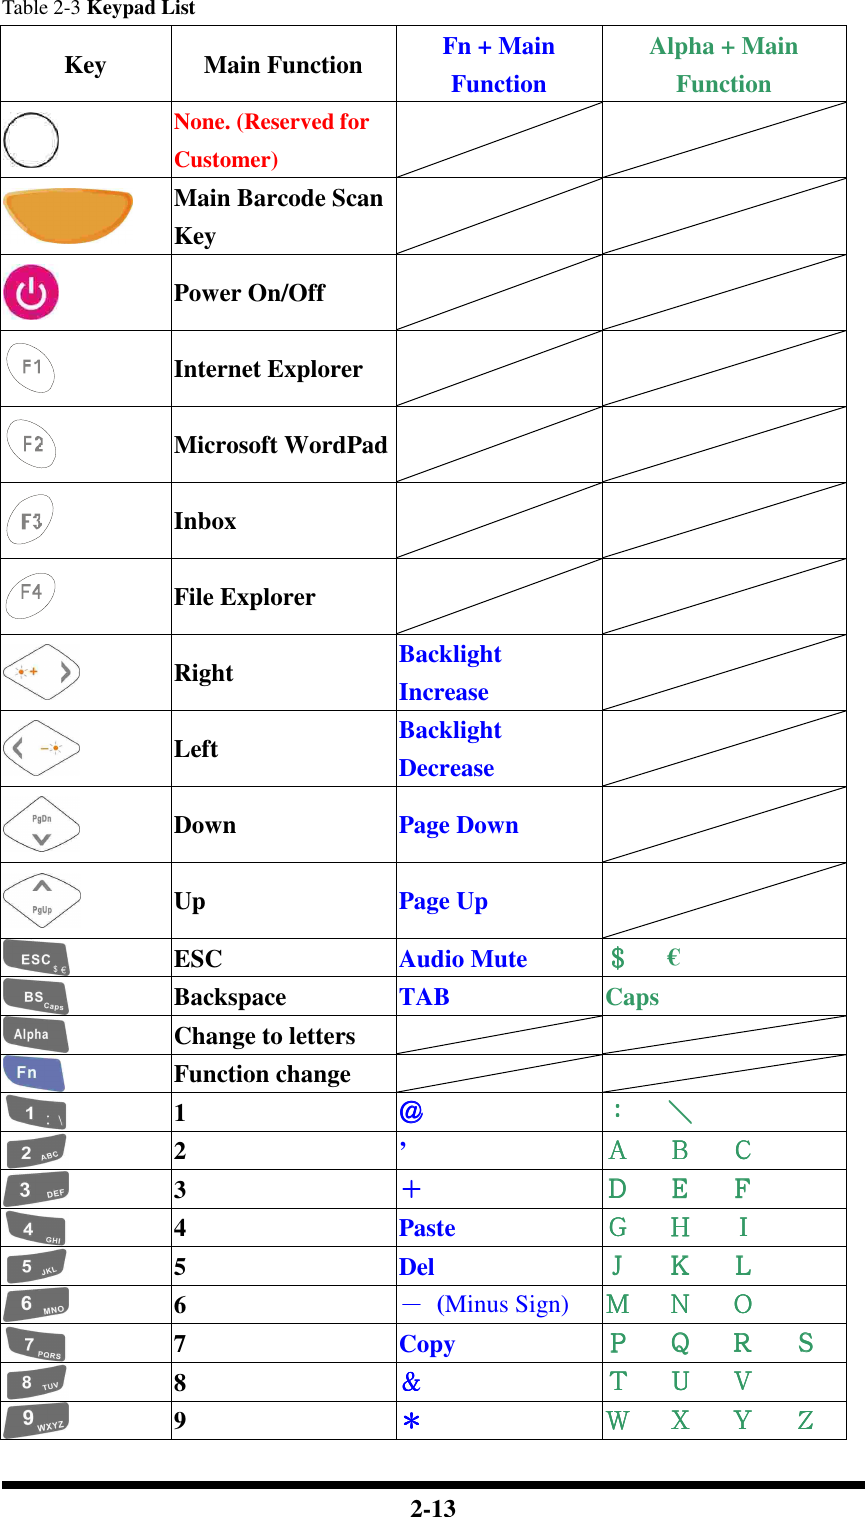  2-13 Table 2-3 Keypad List Key  Main Function  Fn + Main Function Alpha + Main Function  None. (Reserved for Customer)     Main Barcode Scan Key     Power On/Off     Internet Explorer     Microsoft WordPad    Inbox     File Explorer     Right  Backlight   Increase    Left  Backlight Decrease    Down  Page Down    Up  Page Up    ESC  Audio Mute  ＄＄＄＄      €  Backspace  TAB  Caps  Change to letters     Function change     1  ＠＠＠＠ ：：：：     ＼＼＼＼  2  ’  ＡＡＡＡ     ＢＢＢＢ     ＣＣＣＣ  3  ＋＋＋＋ ＤＤＤＤ     ＥＥＥＥ     ＦＦＦＦ  4  Paste  ＧＧＧＧ     ＨＨＨＨ     ＩＩＩＩ  5  Del  ＪＪＪＪ     ＫＫＫＫ     ＬＬＬＬ  6  －－－－  (Minus Sign) ＭＭＭＭ     ＮＮＮＮ     ＯＯＯＯ  7  Copy  ＰＰＰＰ     ＱＱＱＱ     ＲＲＲＲ     ＳＳＳＳ  8  ＆＆＆＆ ＴＴＴＴ     ＵＵＵＵ     ＶＶＶＶ  9  ＊＊＊＊ ＷＷＷＷ     ＸＸＸＸ     ＹＹＹＹ     ＺＺＺＺ 